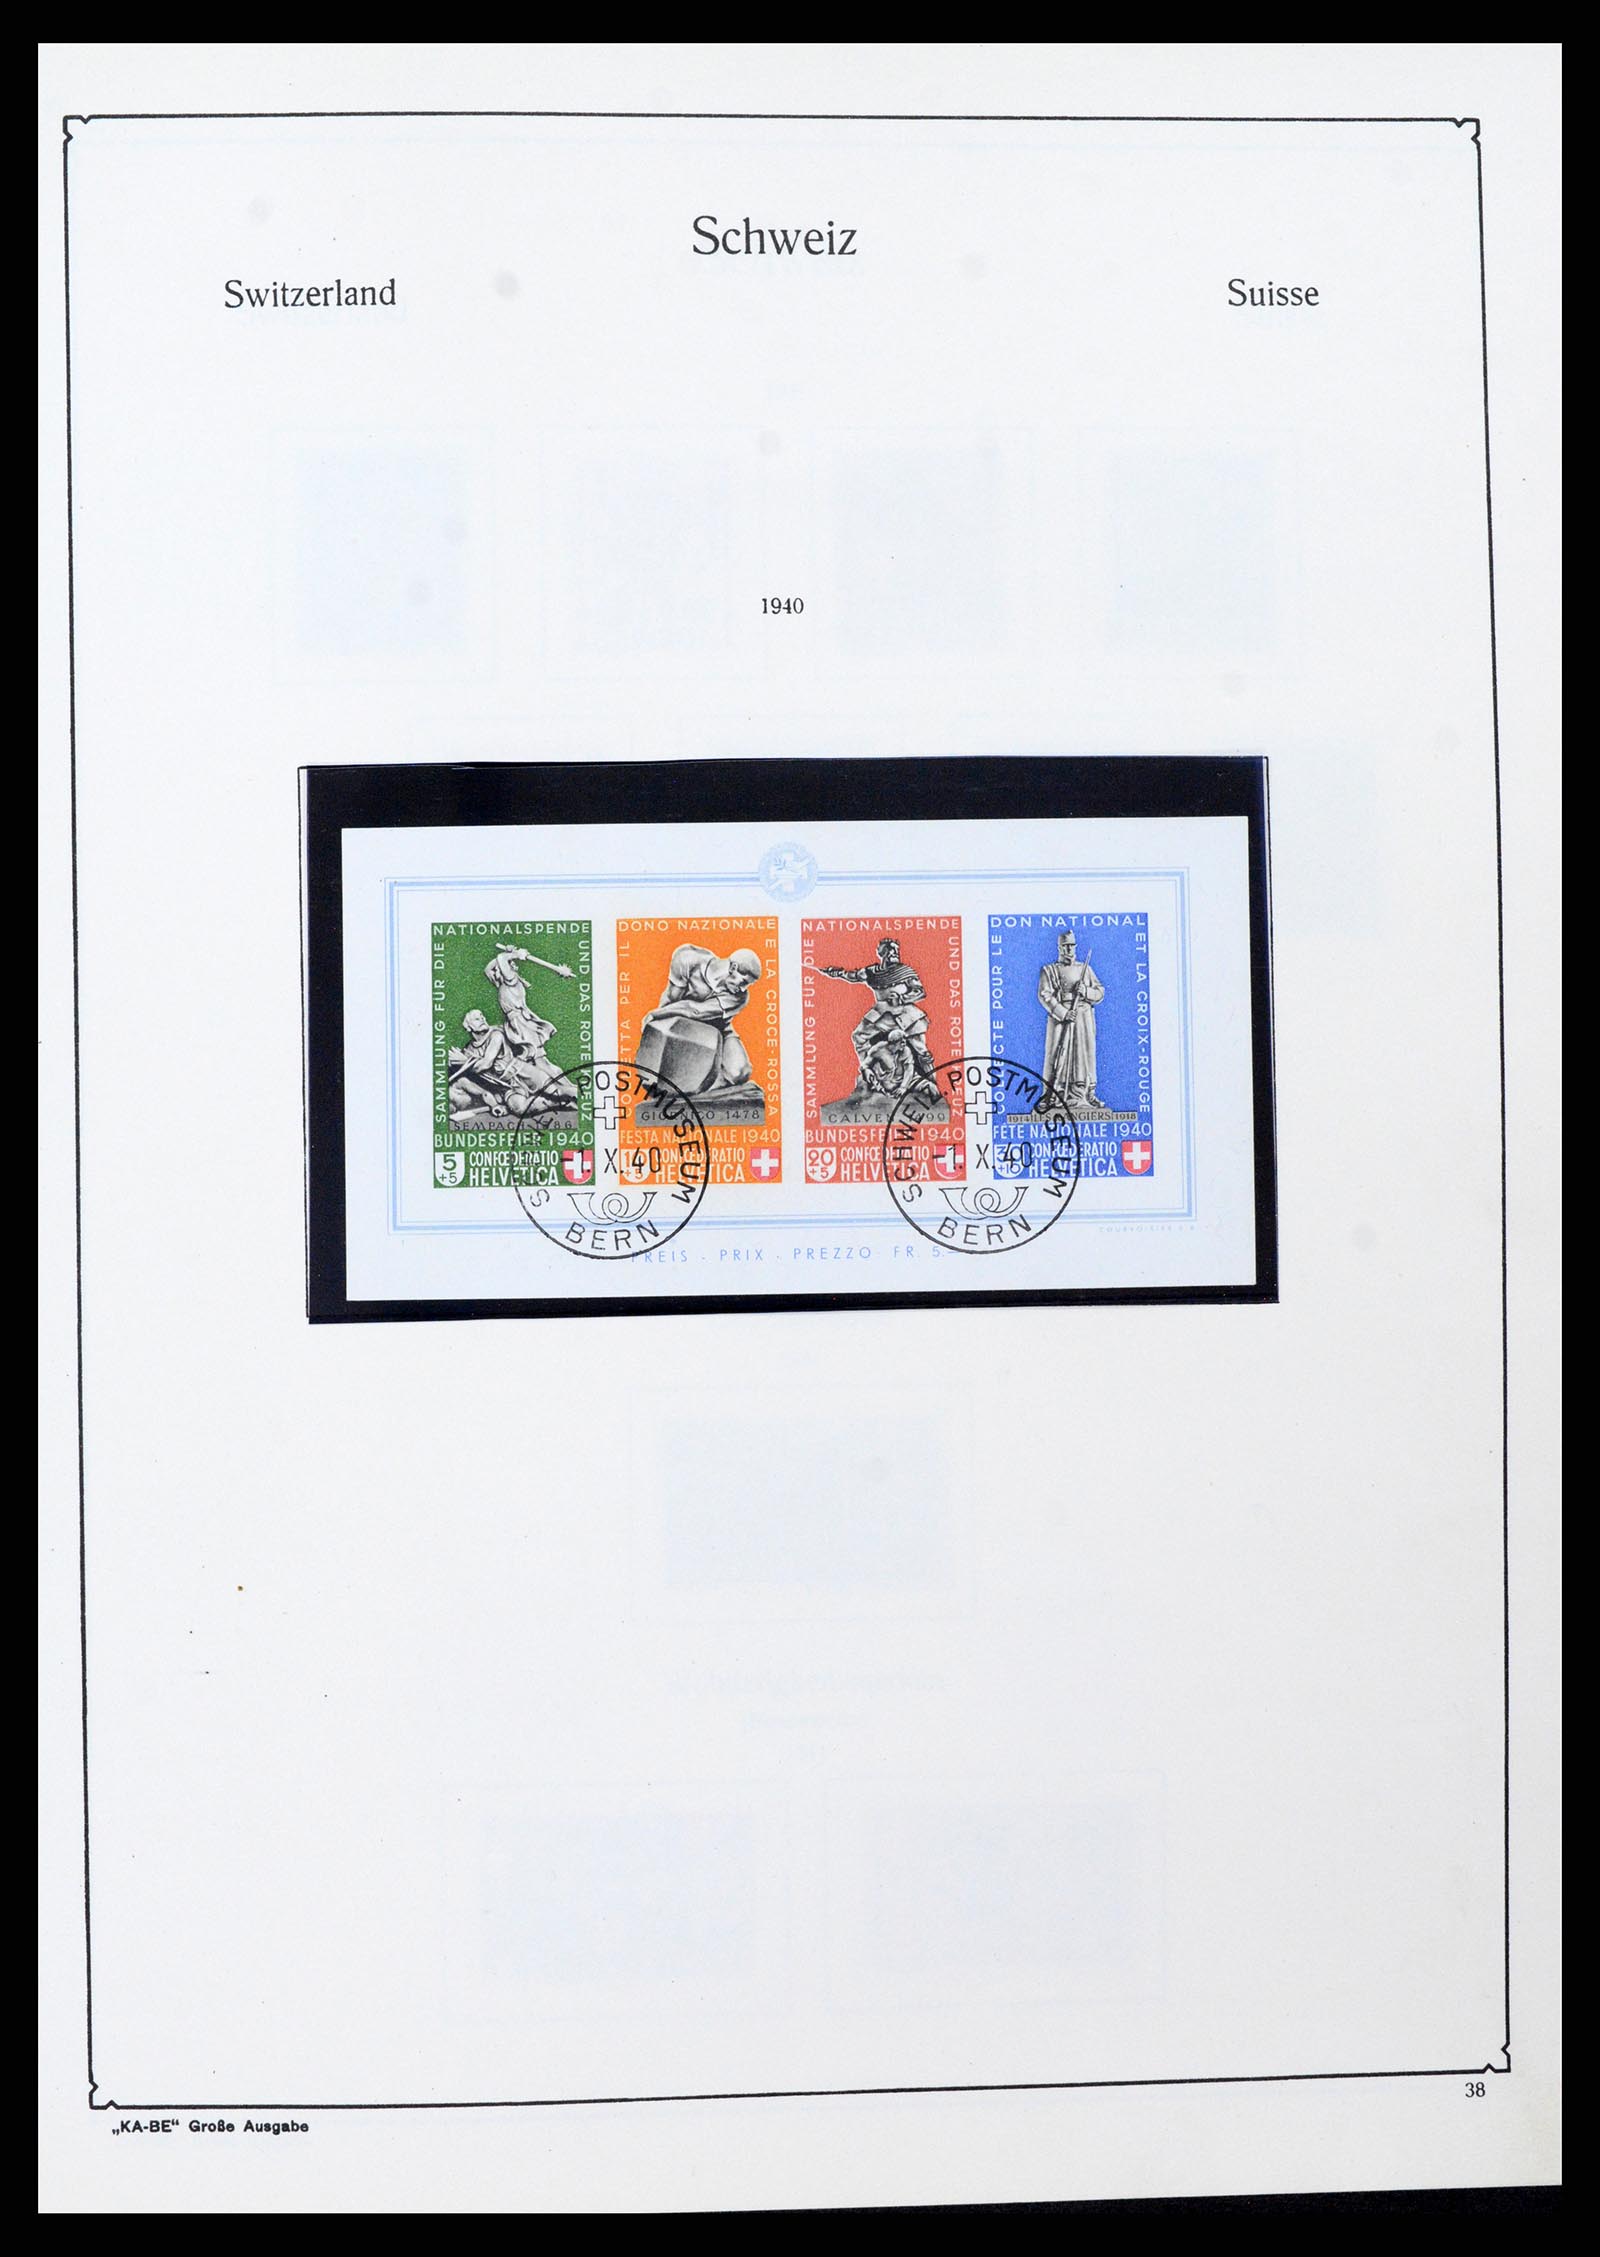 37588 037 - Stamp collection 37588 Switzerland 1854-1974.